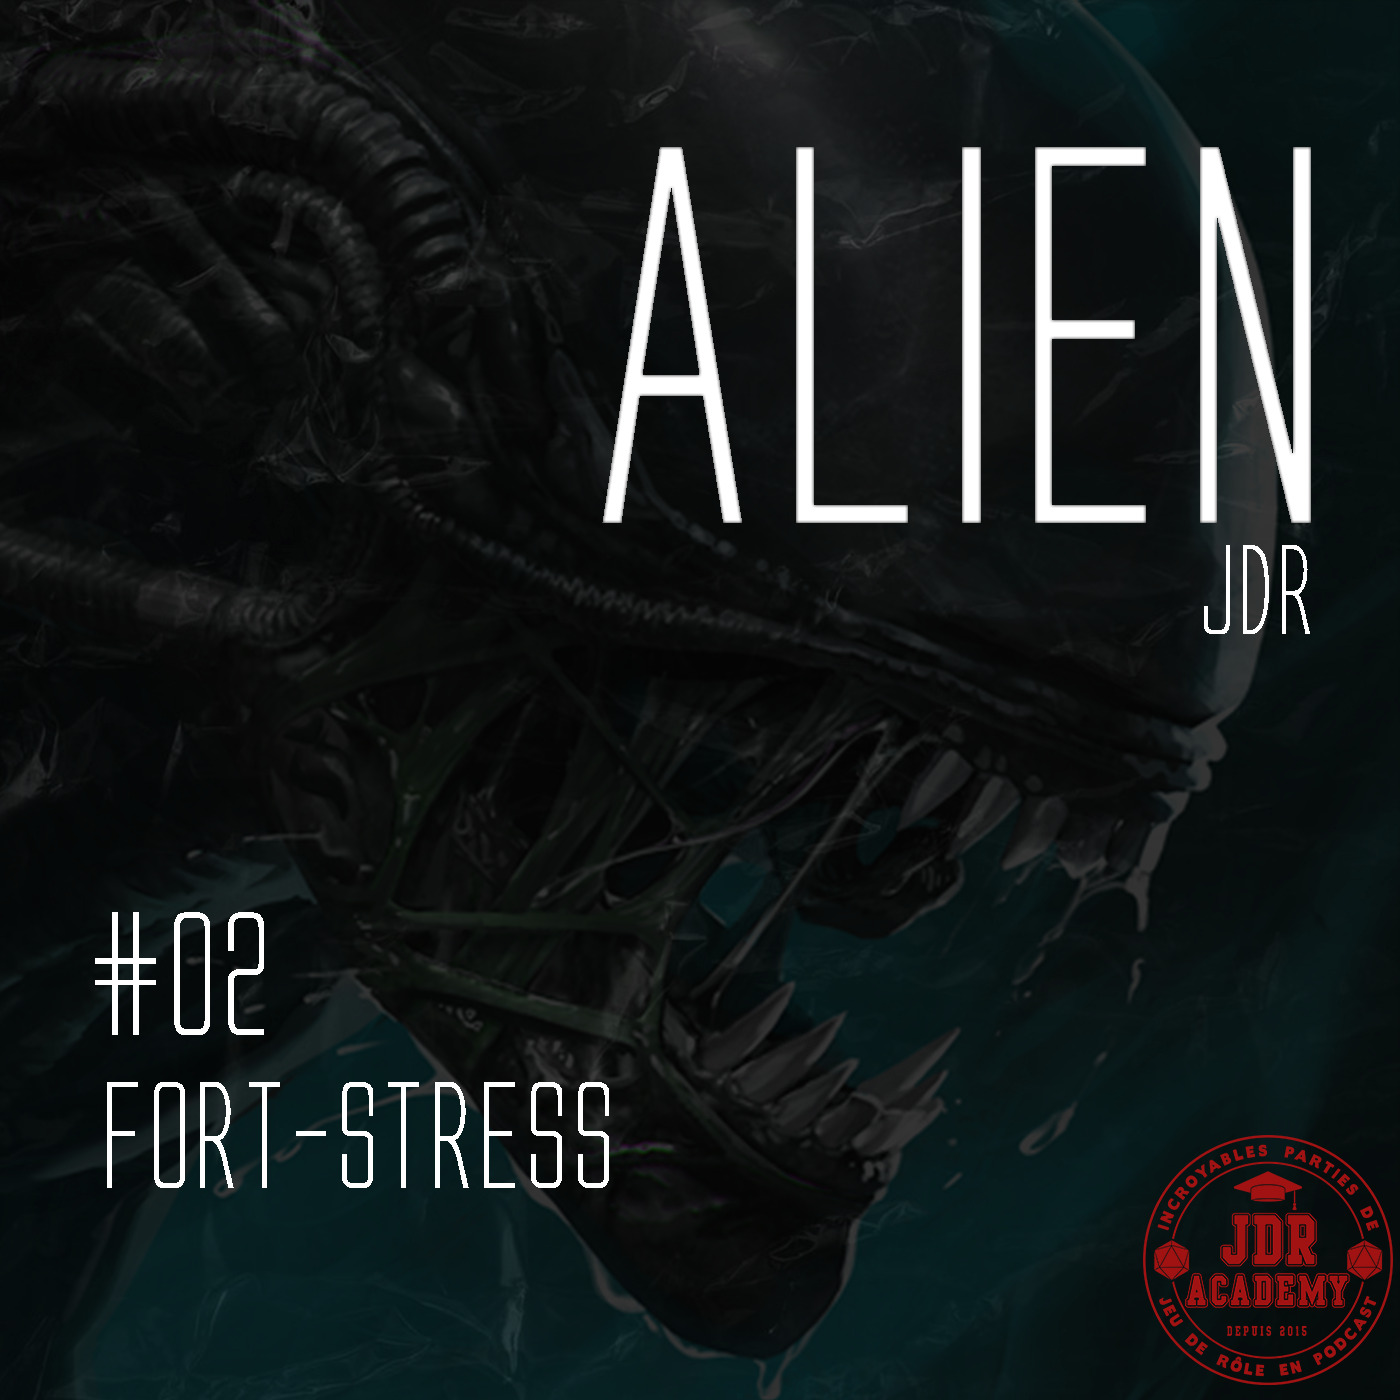 Alien #02 – Fort-stress